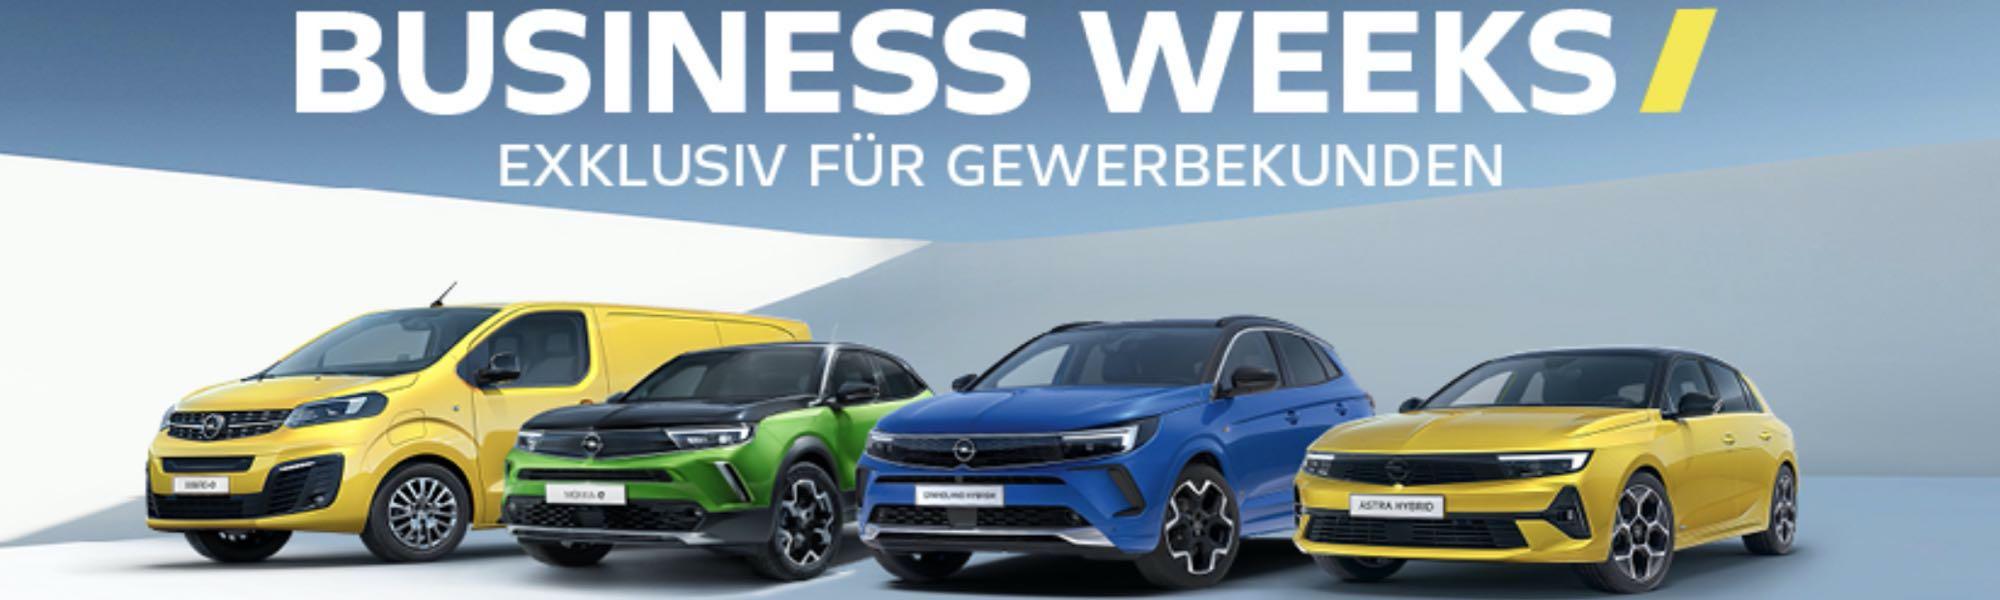 Opel Business-Weeks